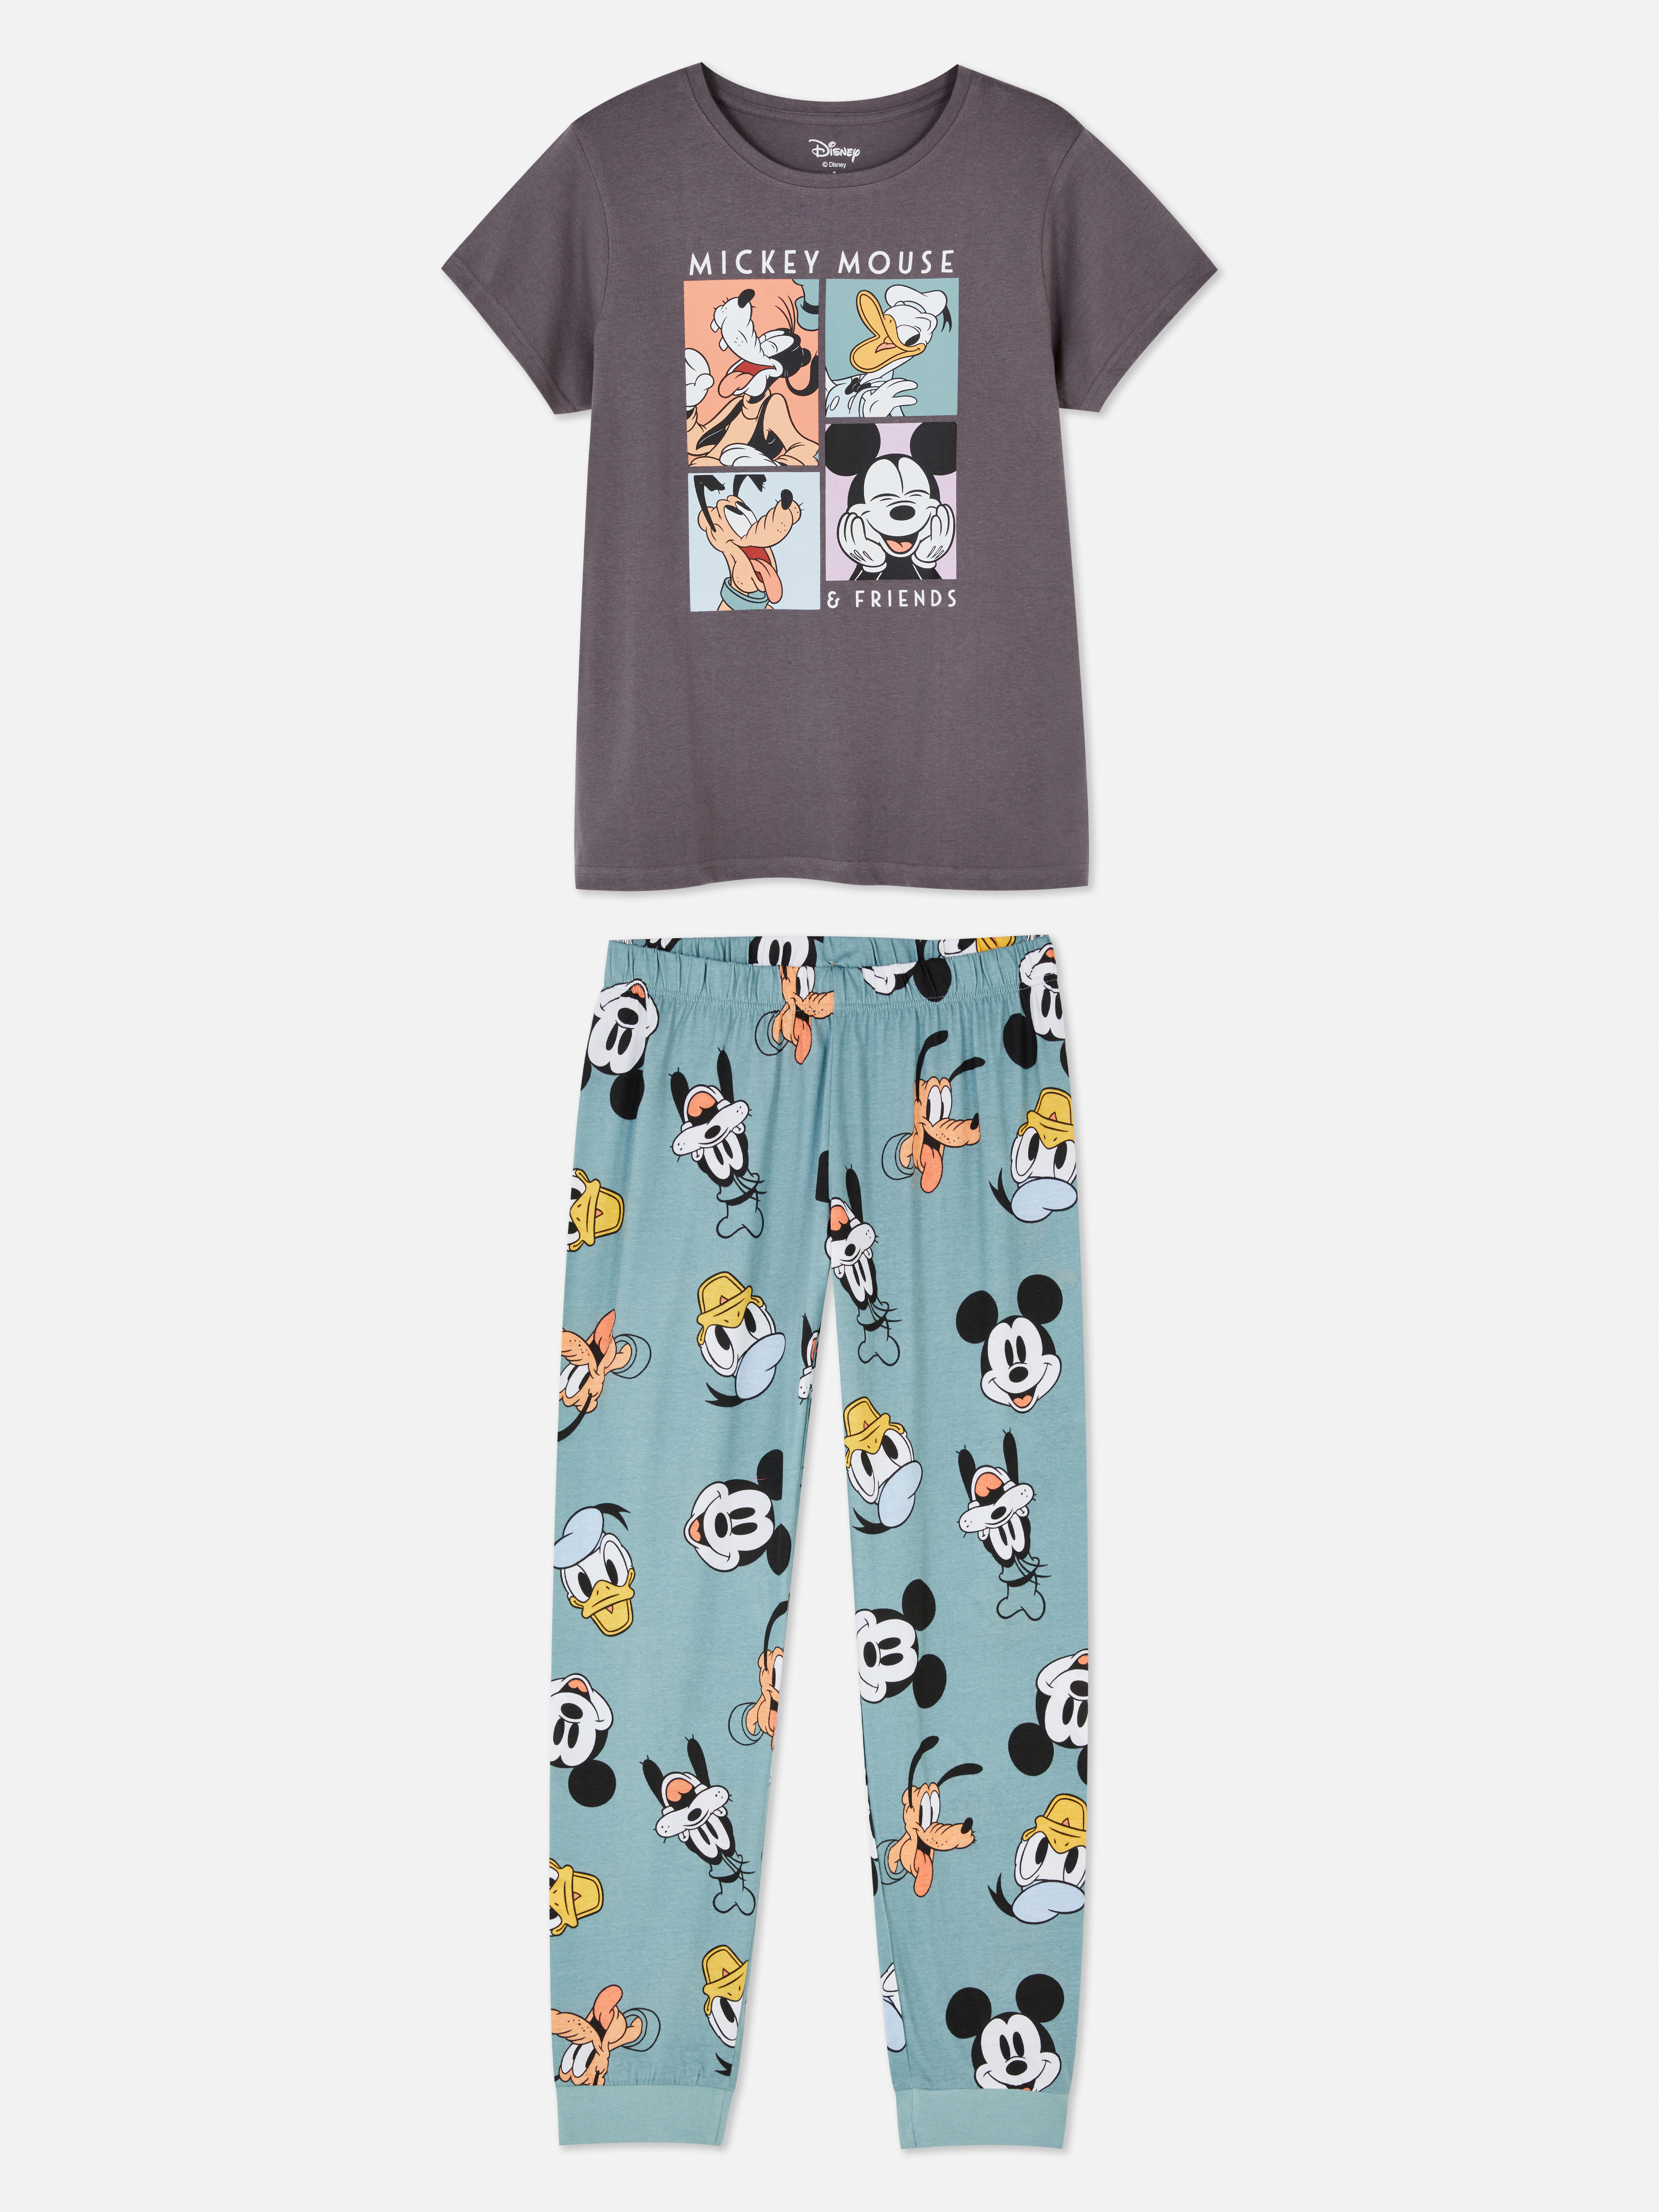 Maken Bestuiver natuurpark Disney's Mickey Mouse & Friends Short Sleeve Pyjama Set | Primark